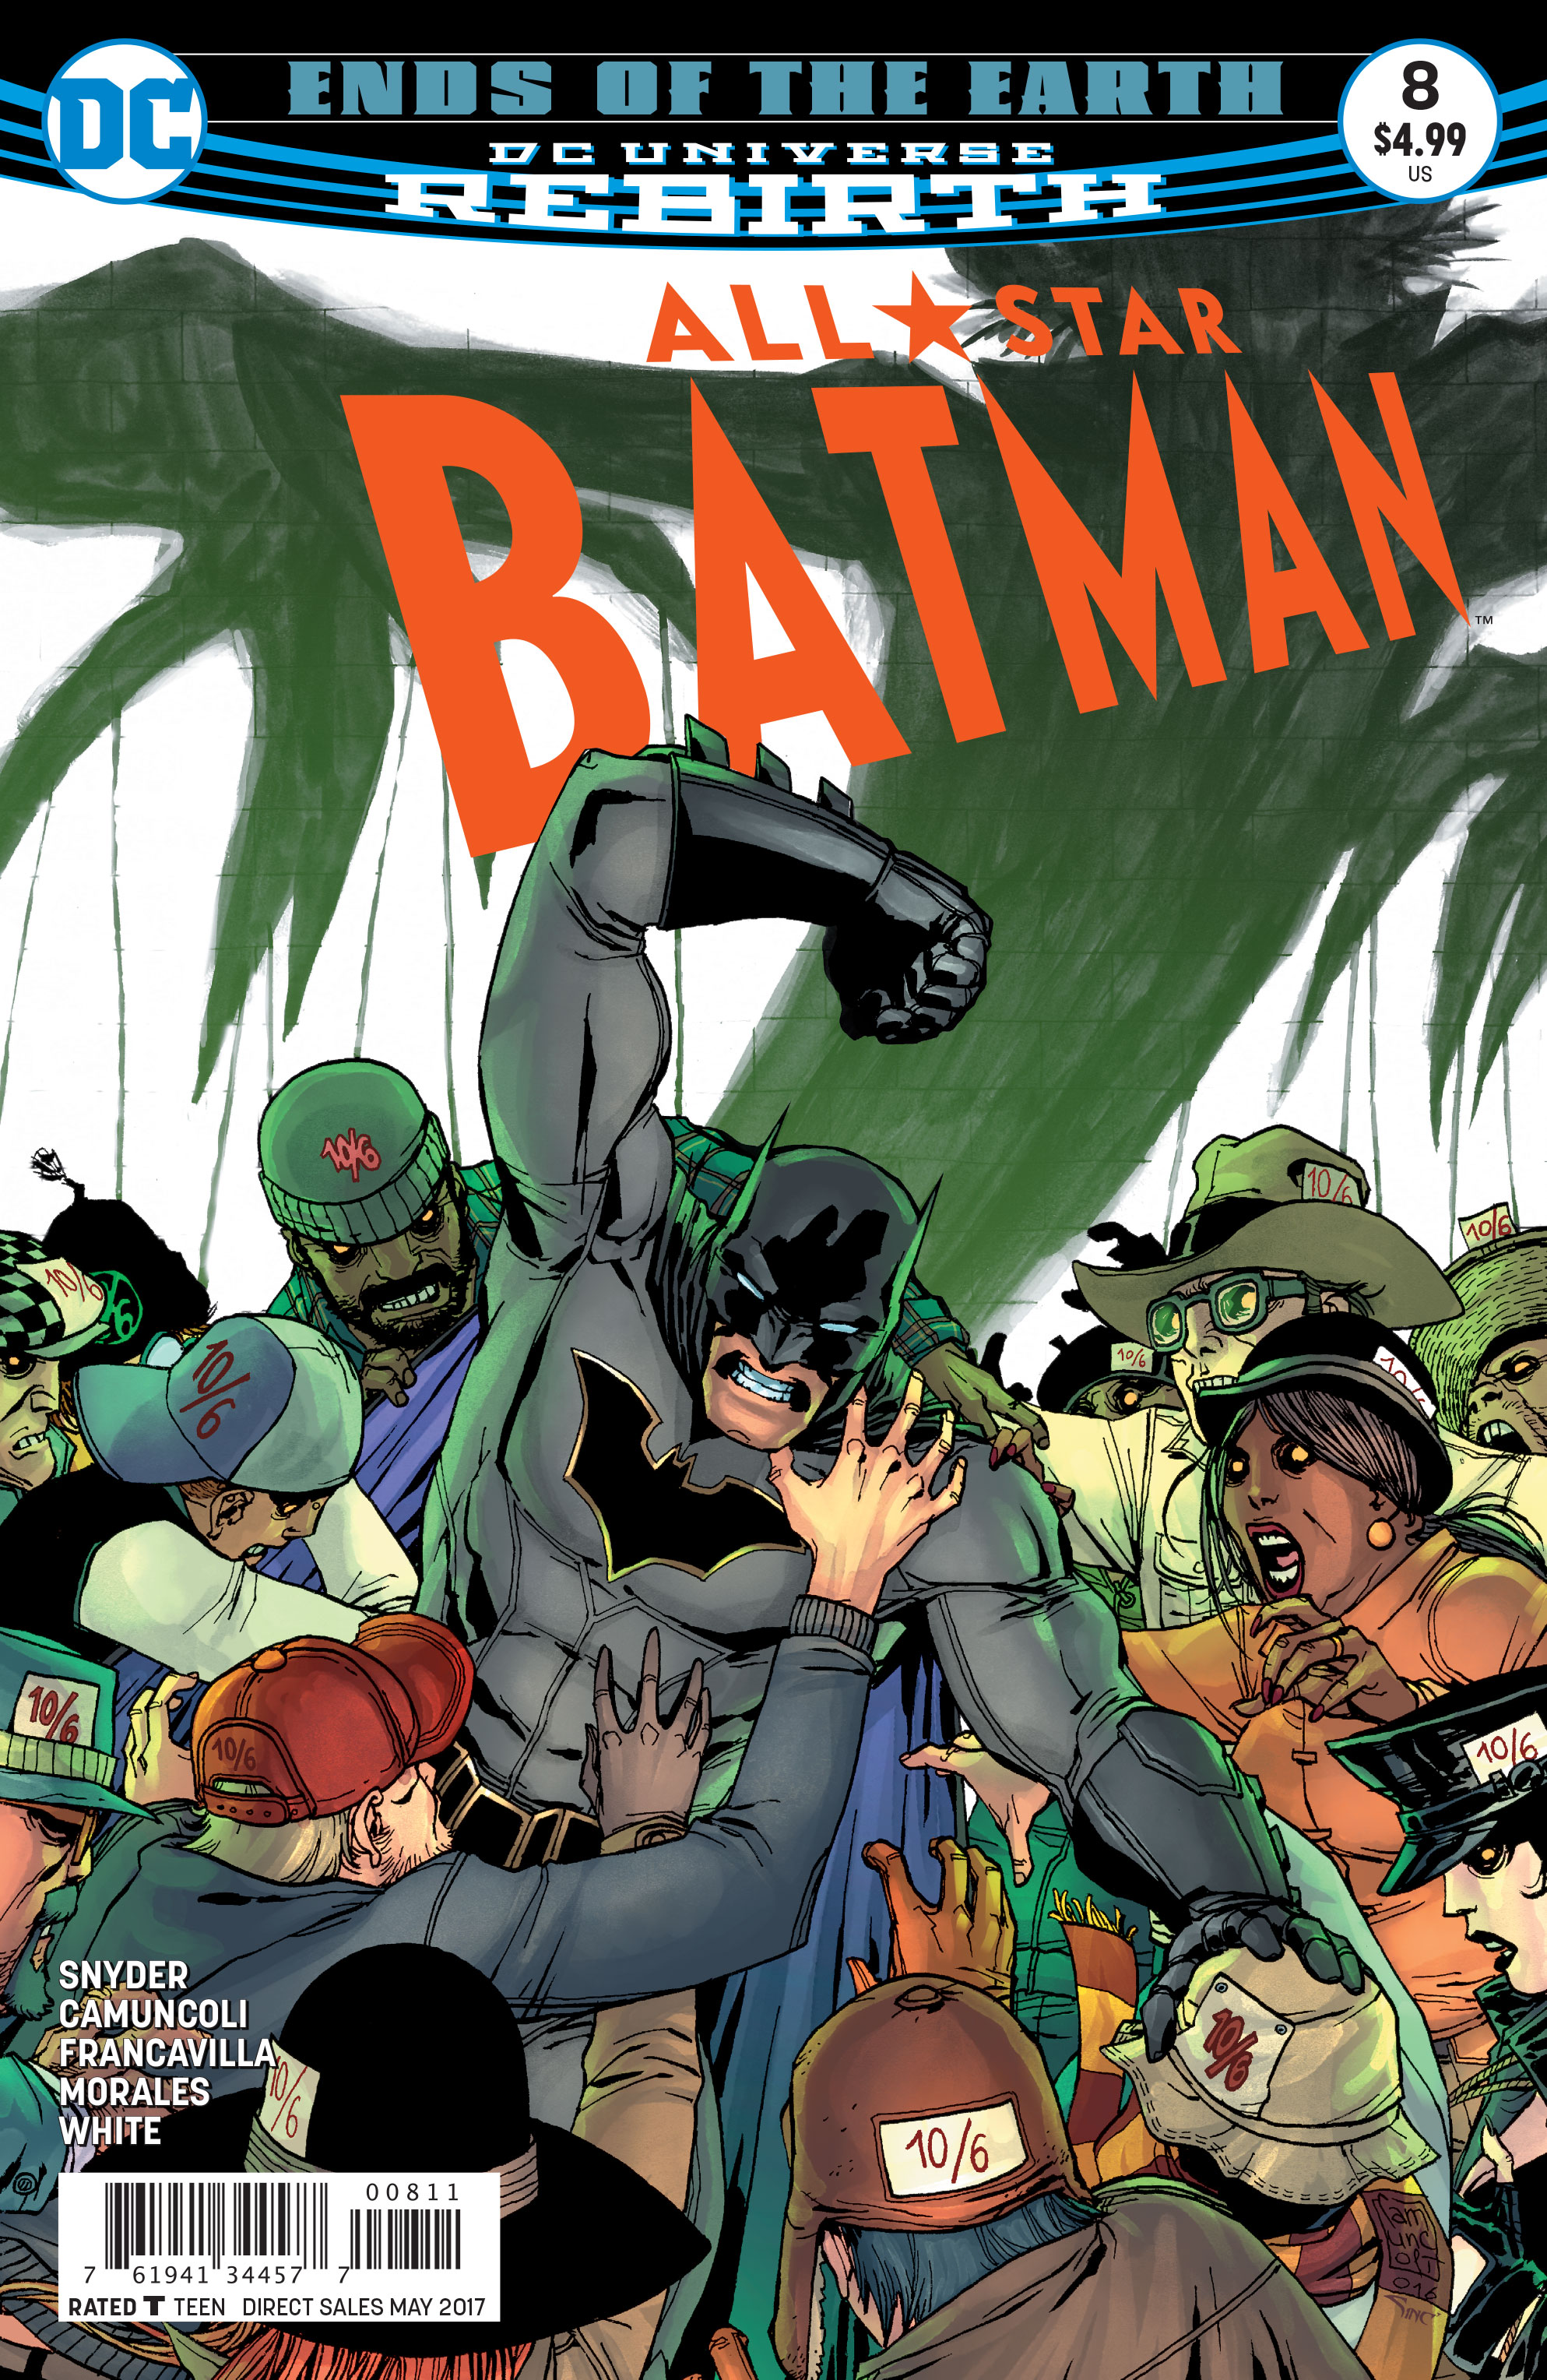 DC Preview: All-Star Batman #8